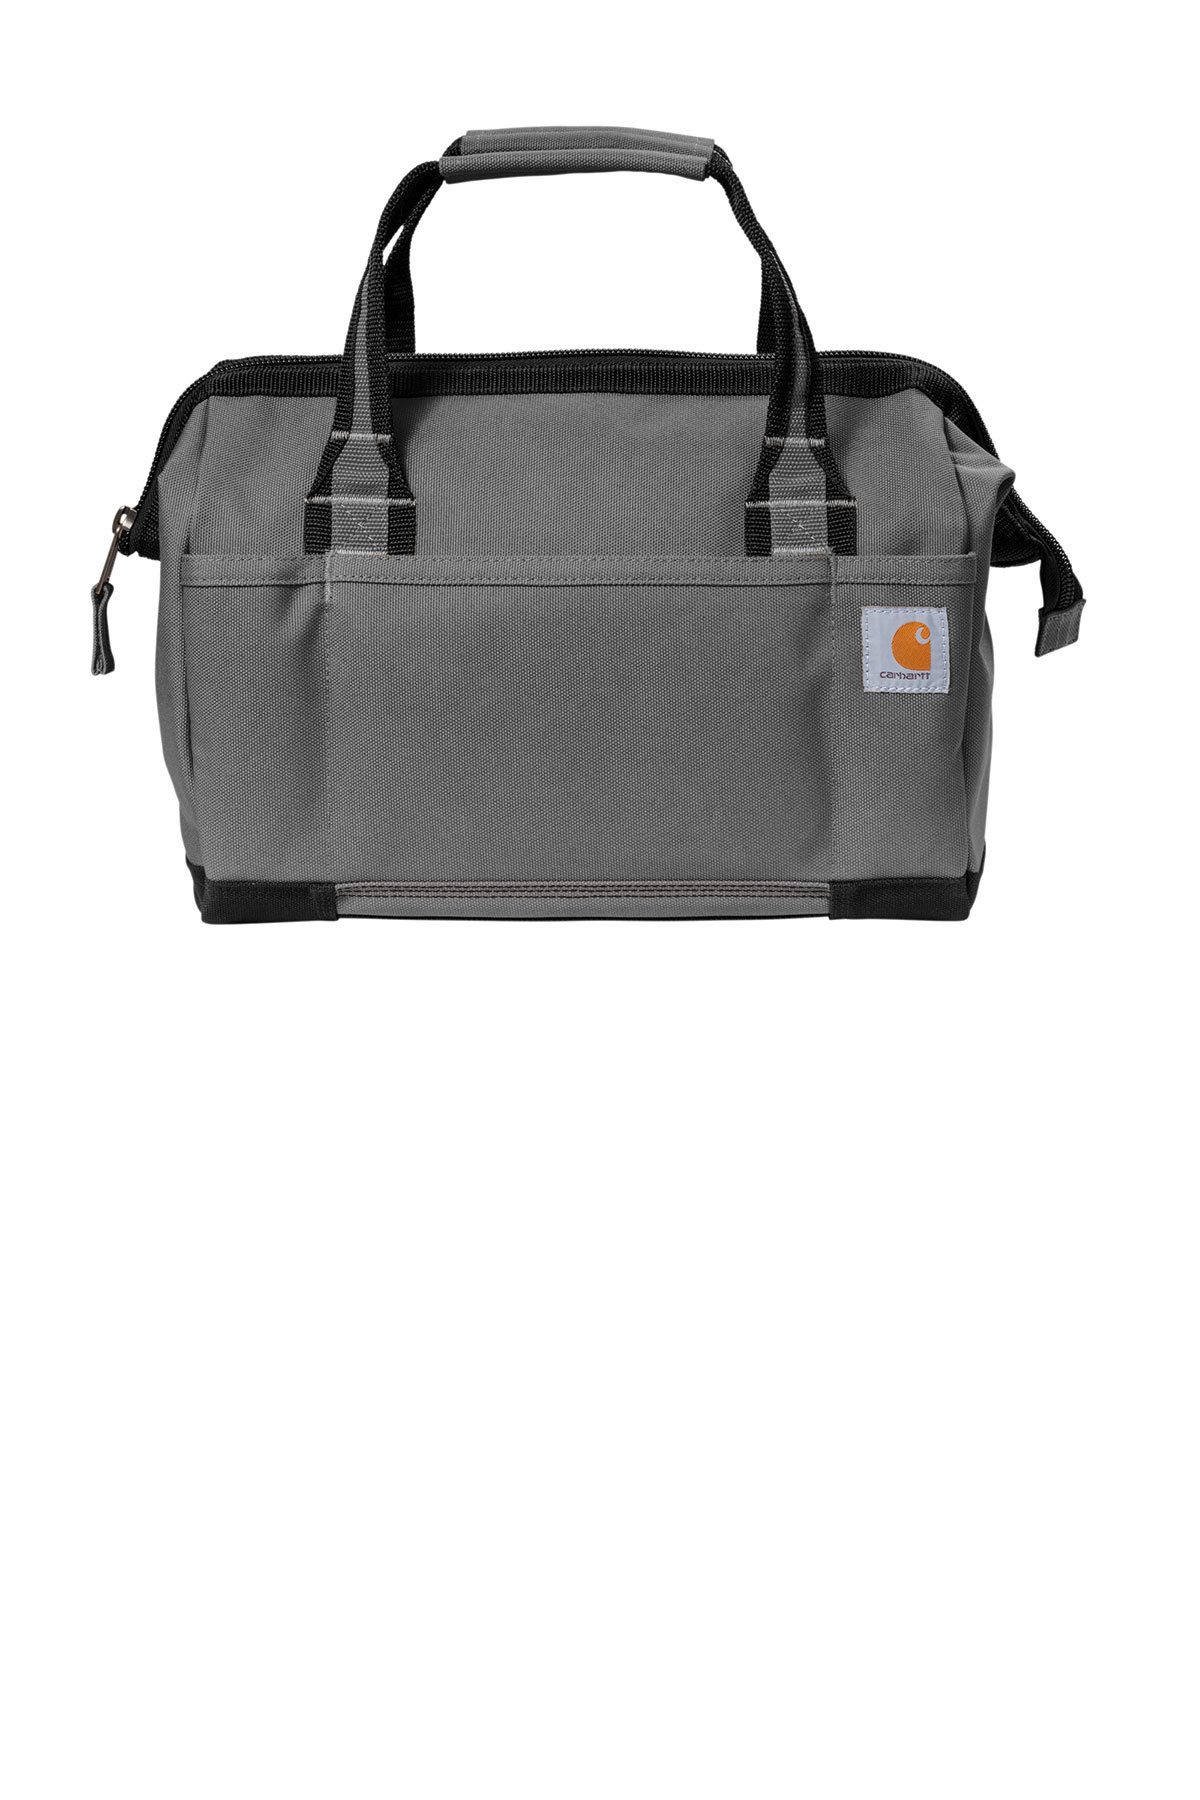 Carhartt Foundry Series 14” Tool Bag | Product | SanMar